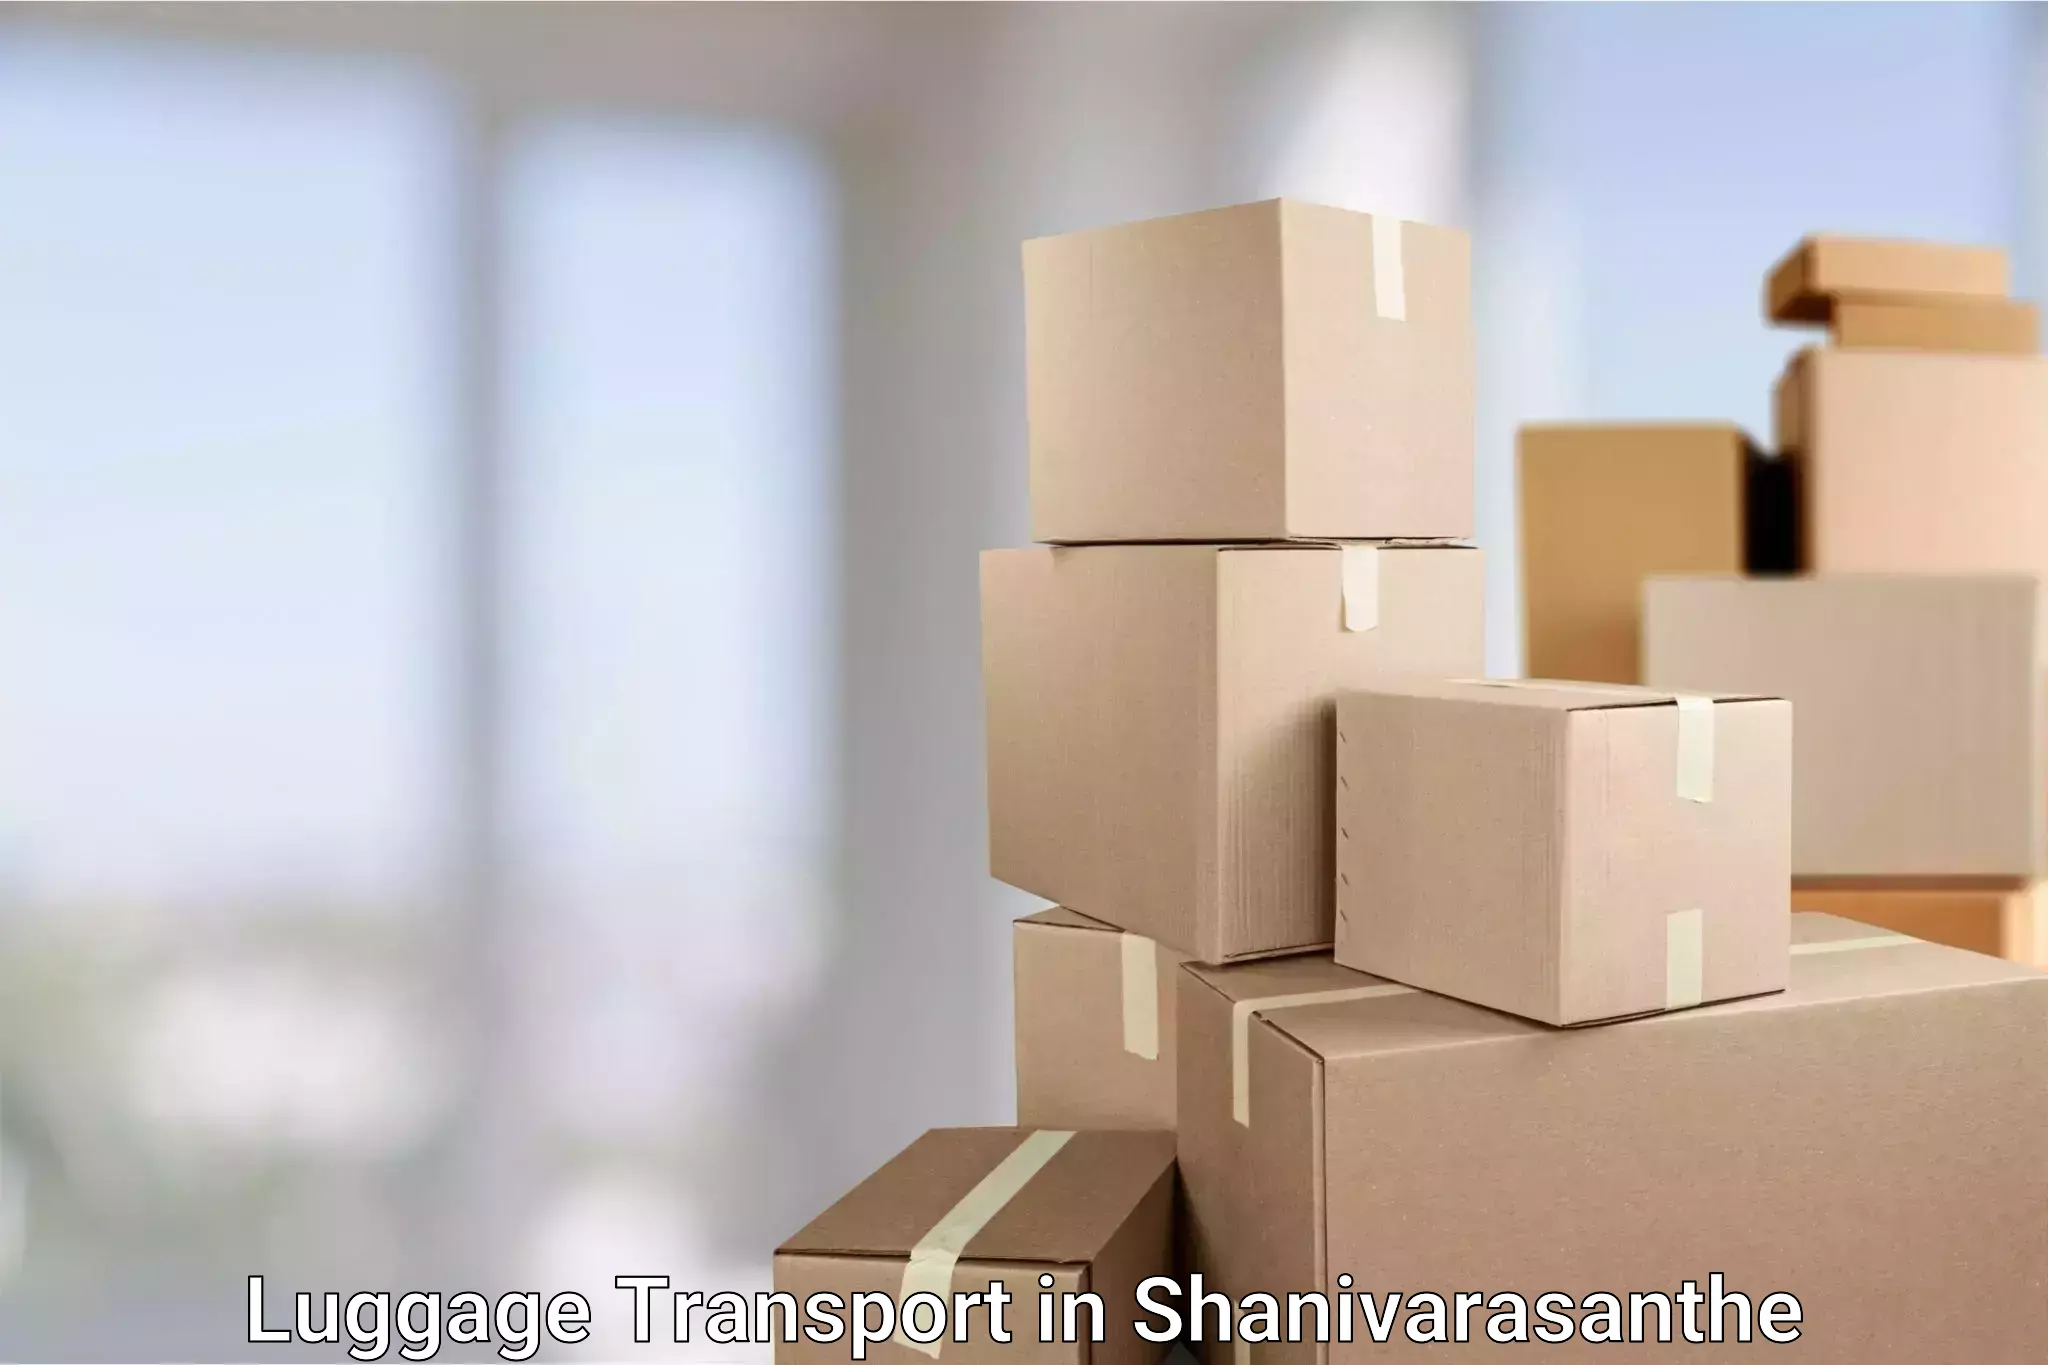 Group luggage shipping in Shanivarasanthe